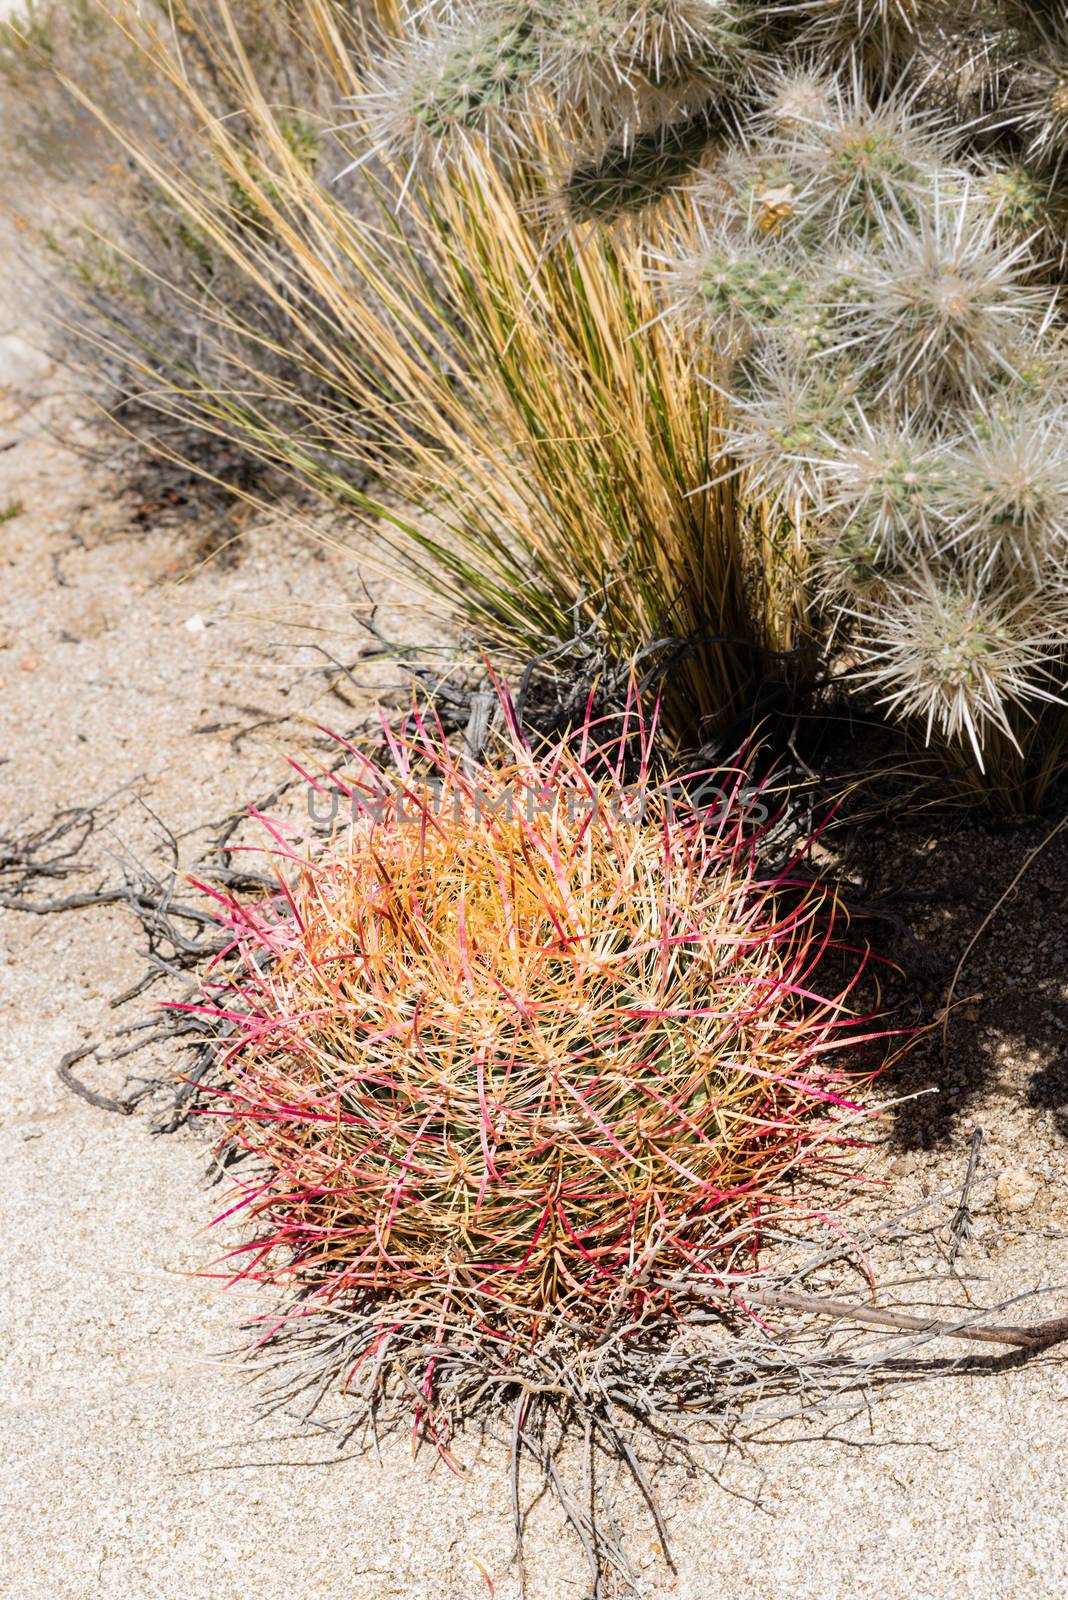 Cactus varieties in Joshua Tree National Park, California